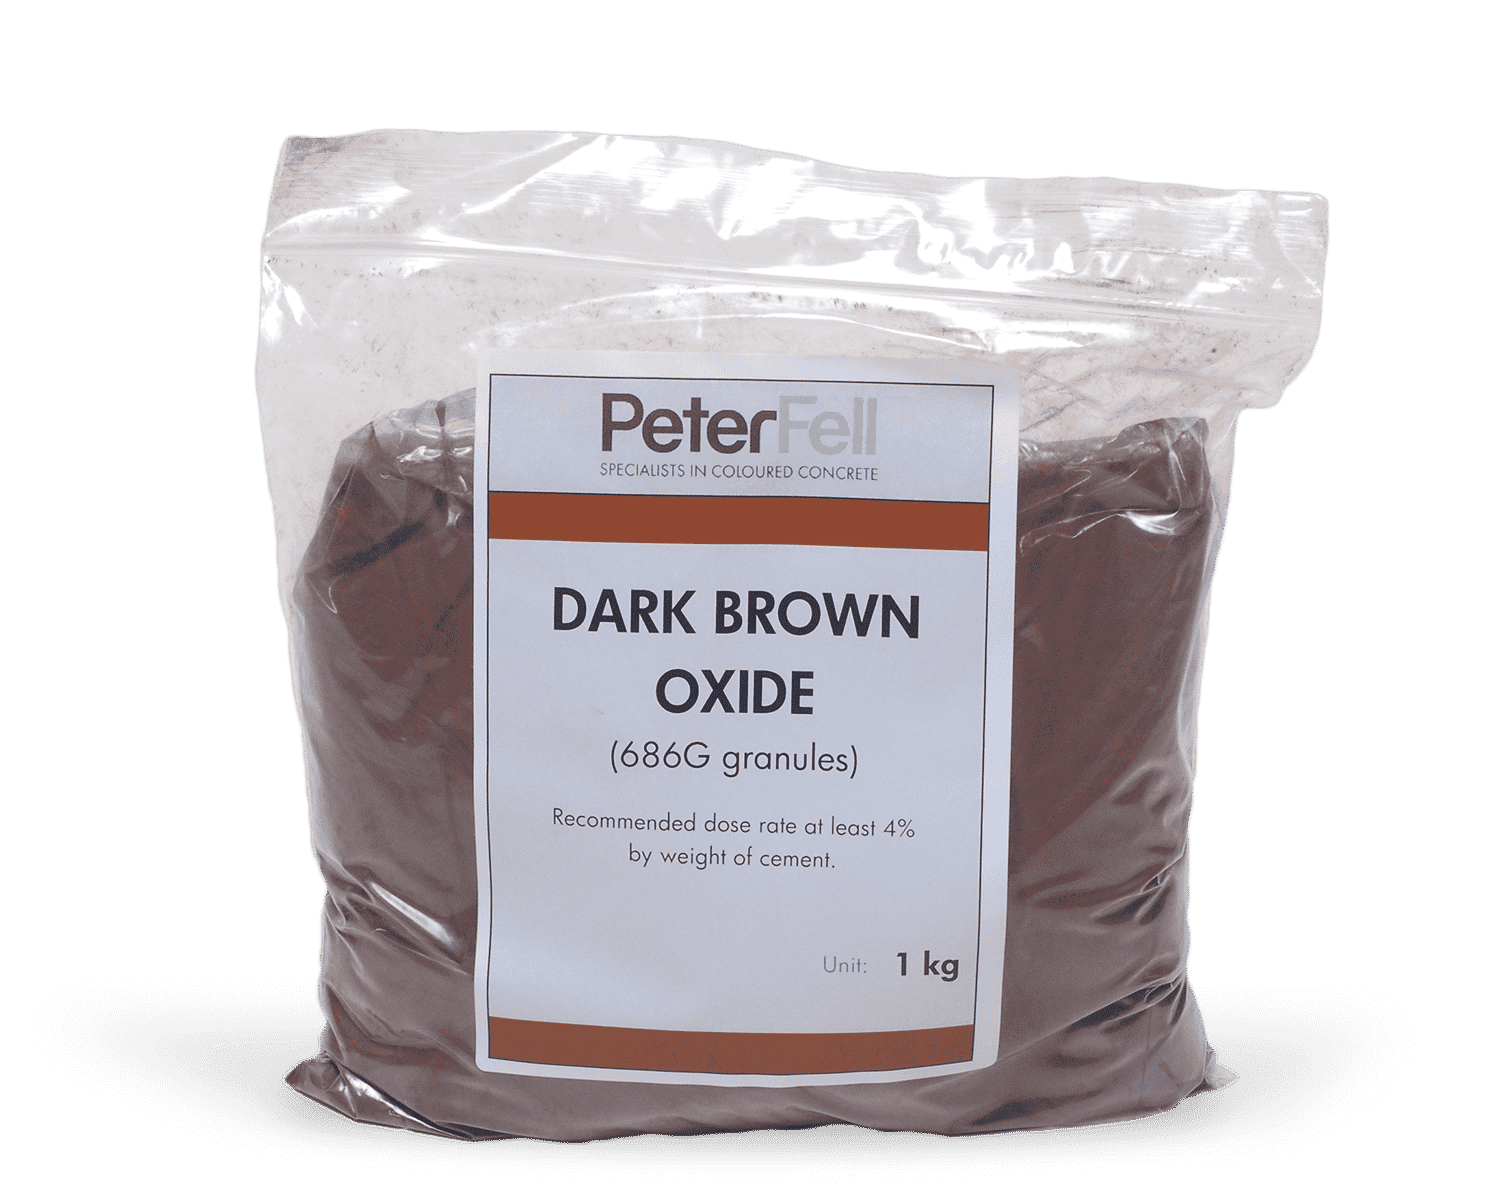 Dark brown oxide for colouring concrete